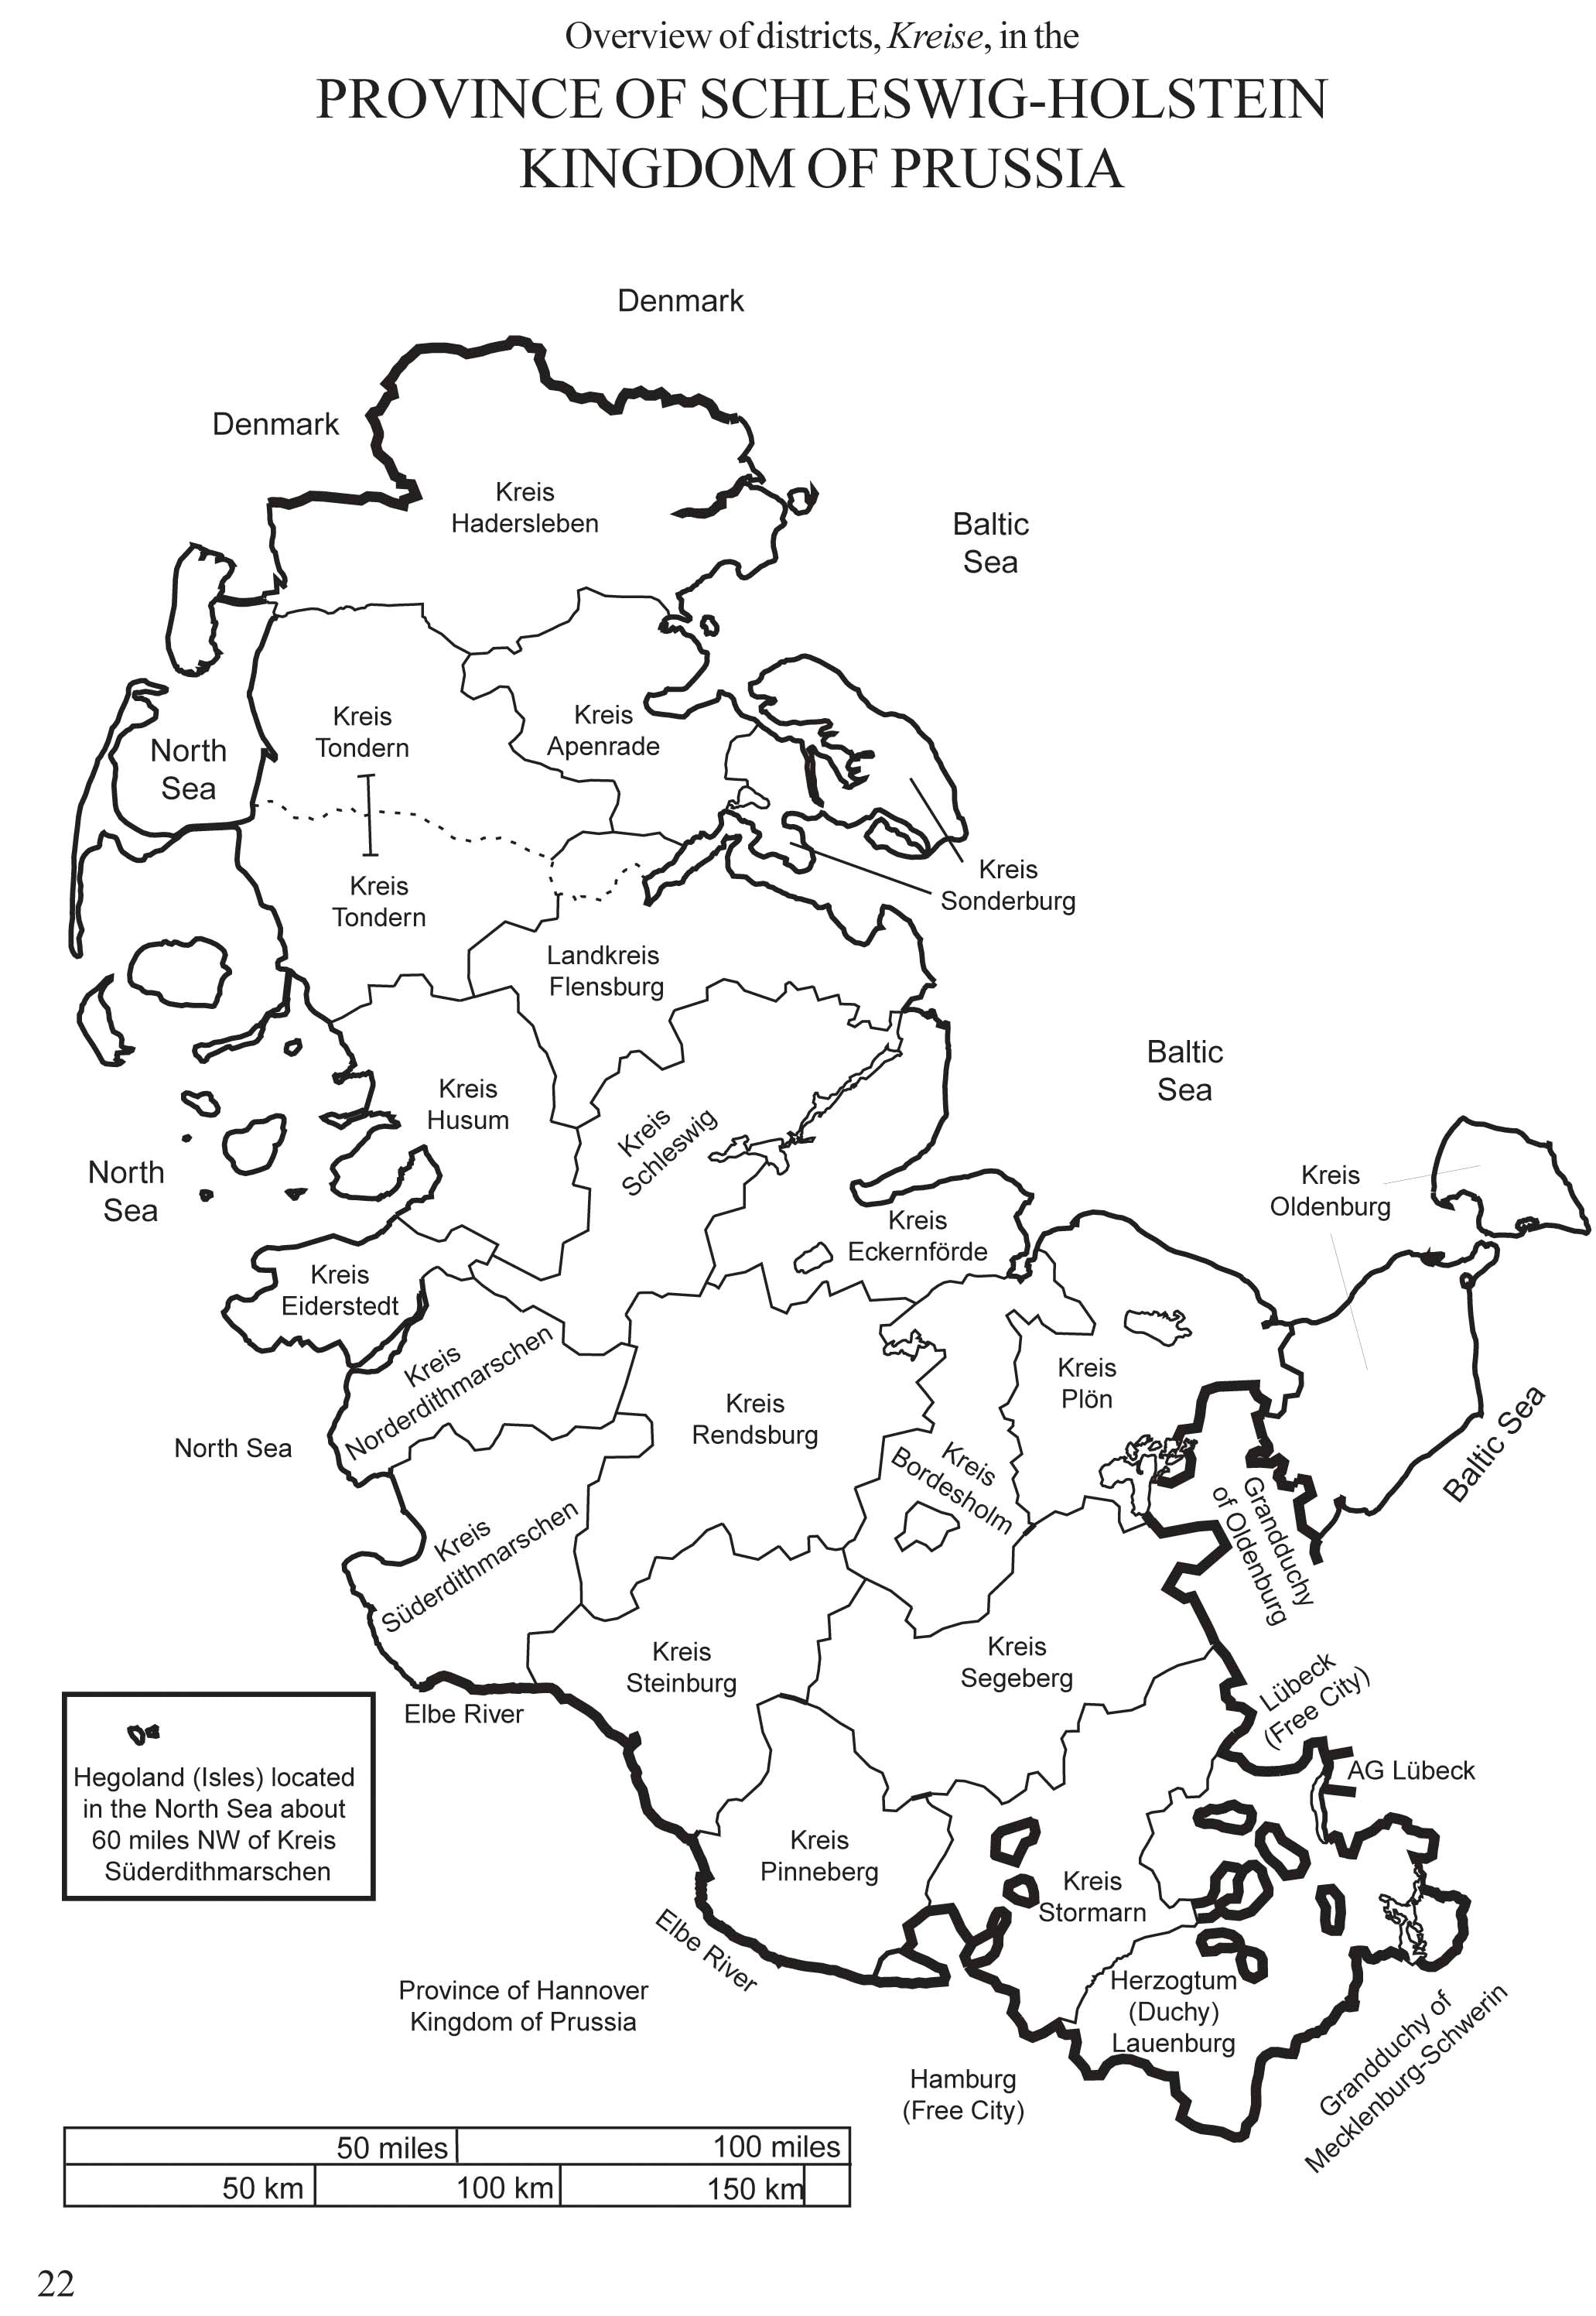 Map Guide To German Parish Registers Vol. 4 - Oldenburg & Schleswig-Holstein - PDF eBook